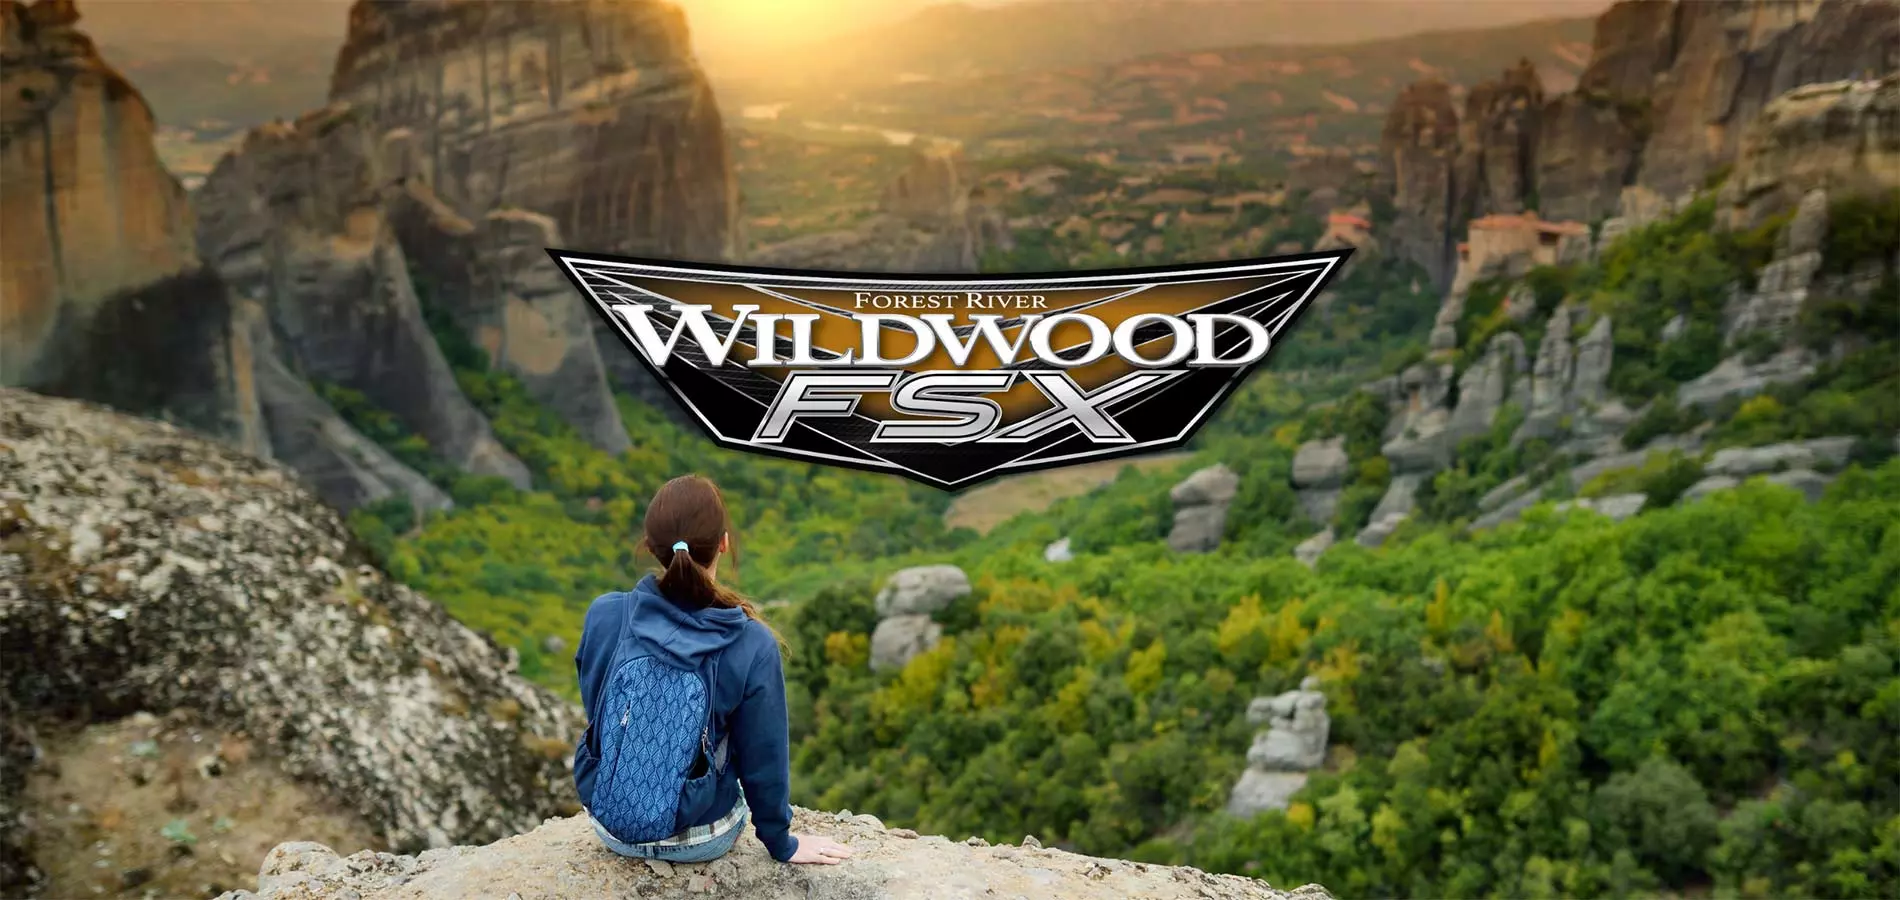 Wildwood FSX RVs